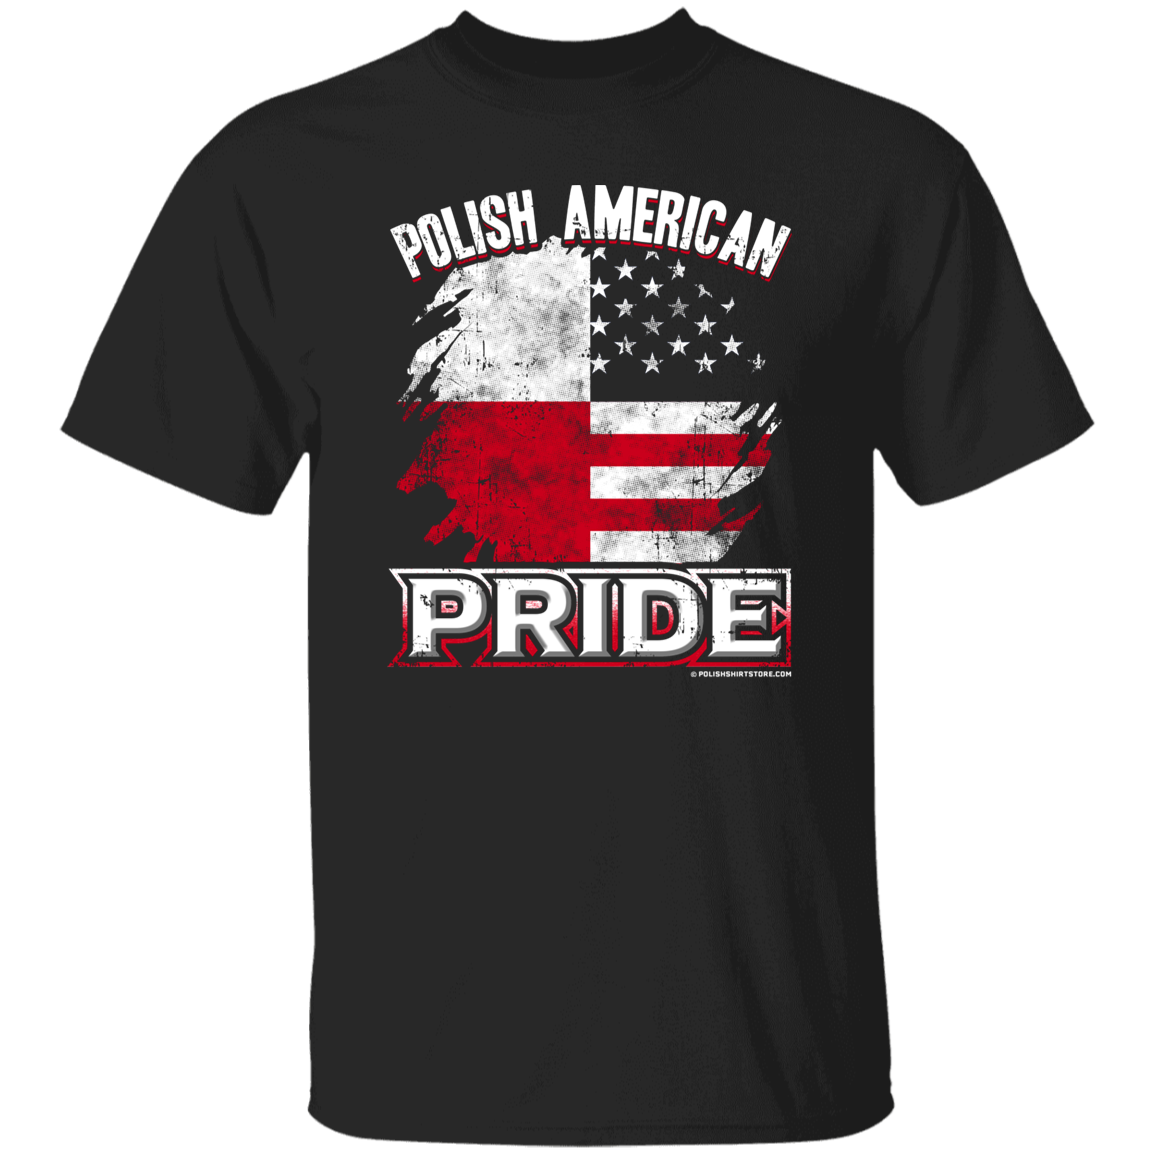 Polish American Pride Apparel CustomCat G500 5.3 oz. T-Shirt Black S